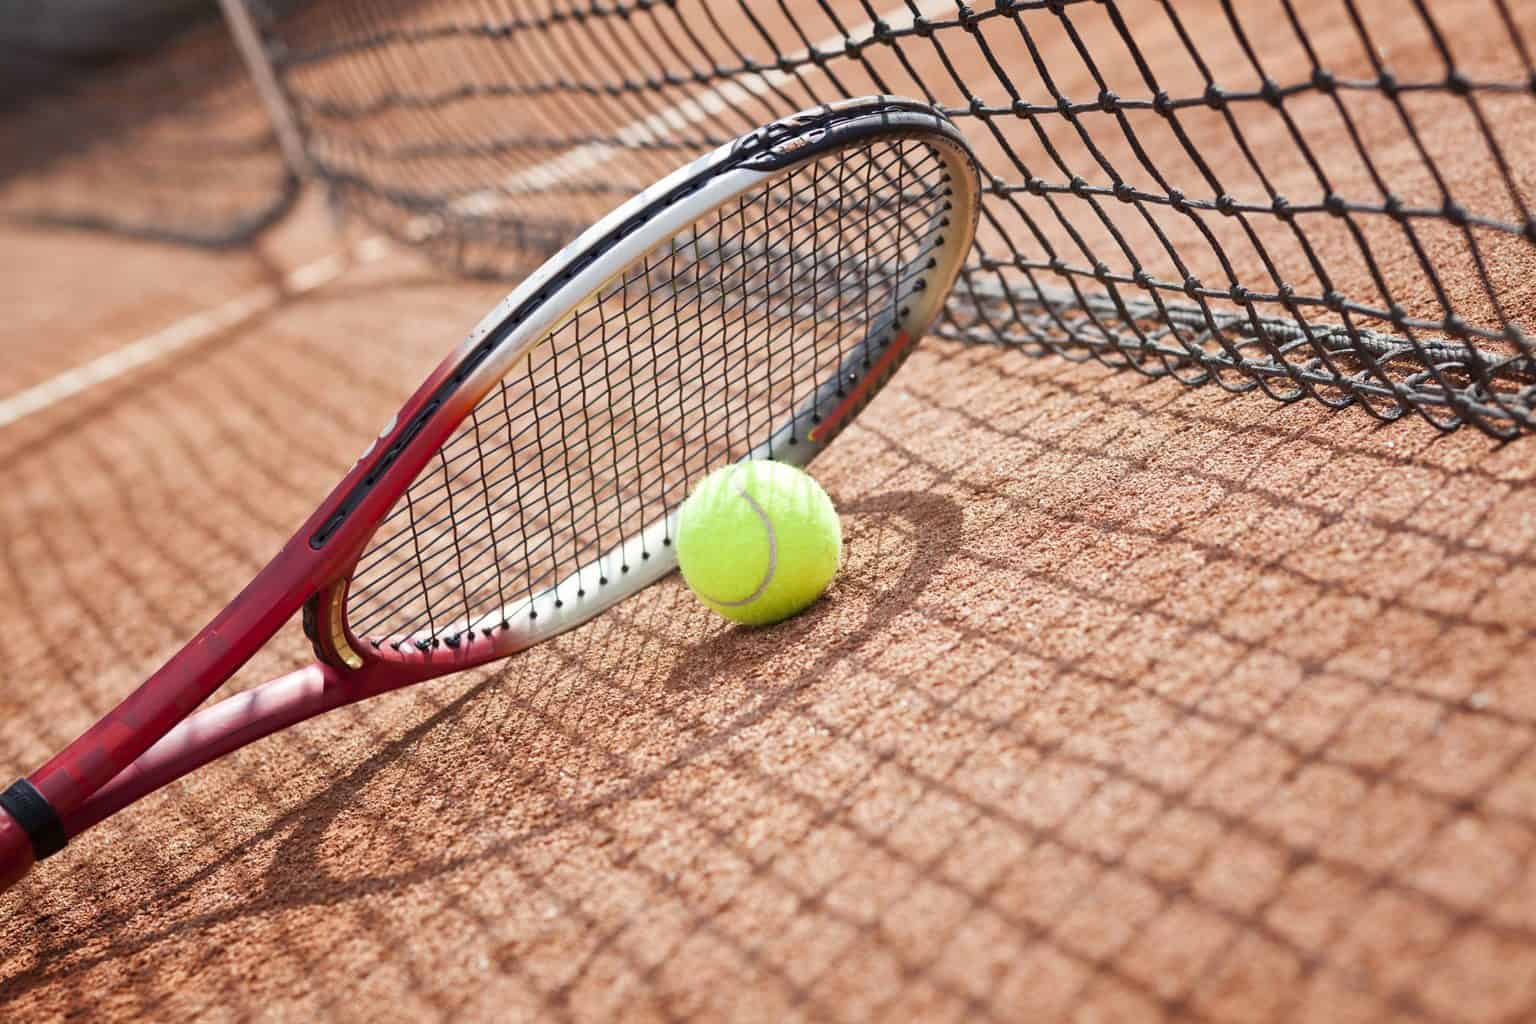 Tennis Accessories Handbook Our Top Tennis Racket & Gear Picks